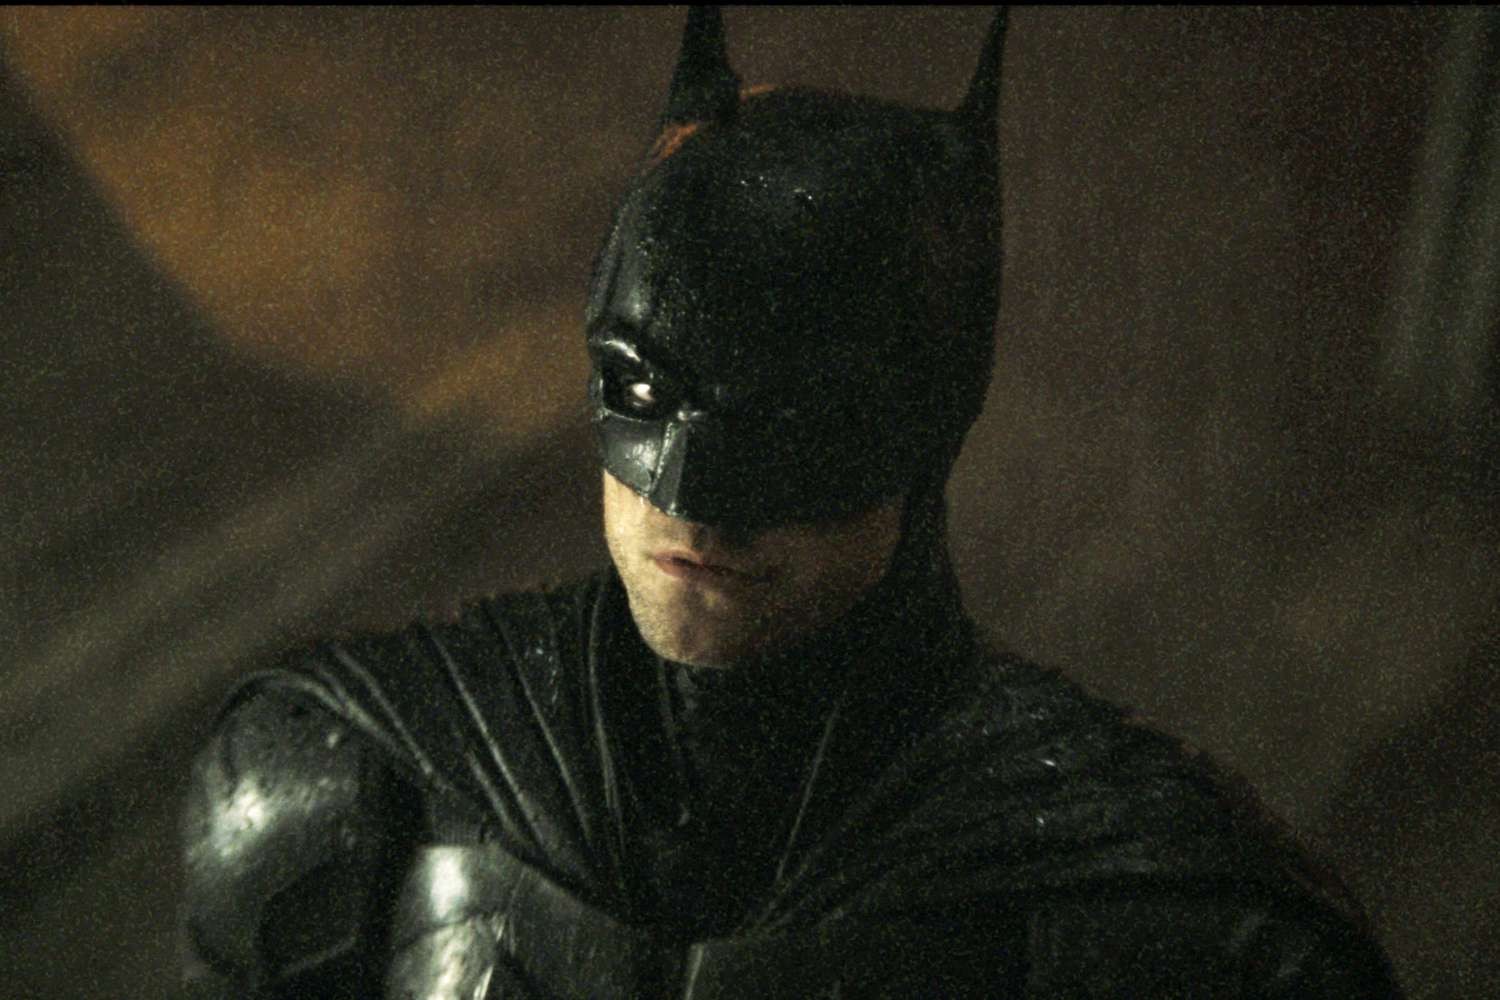 Robert Pattinson in a still from The Batman